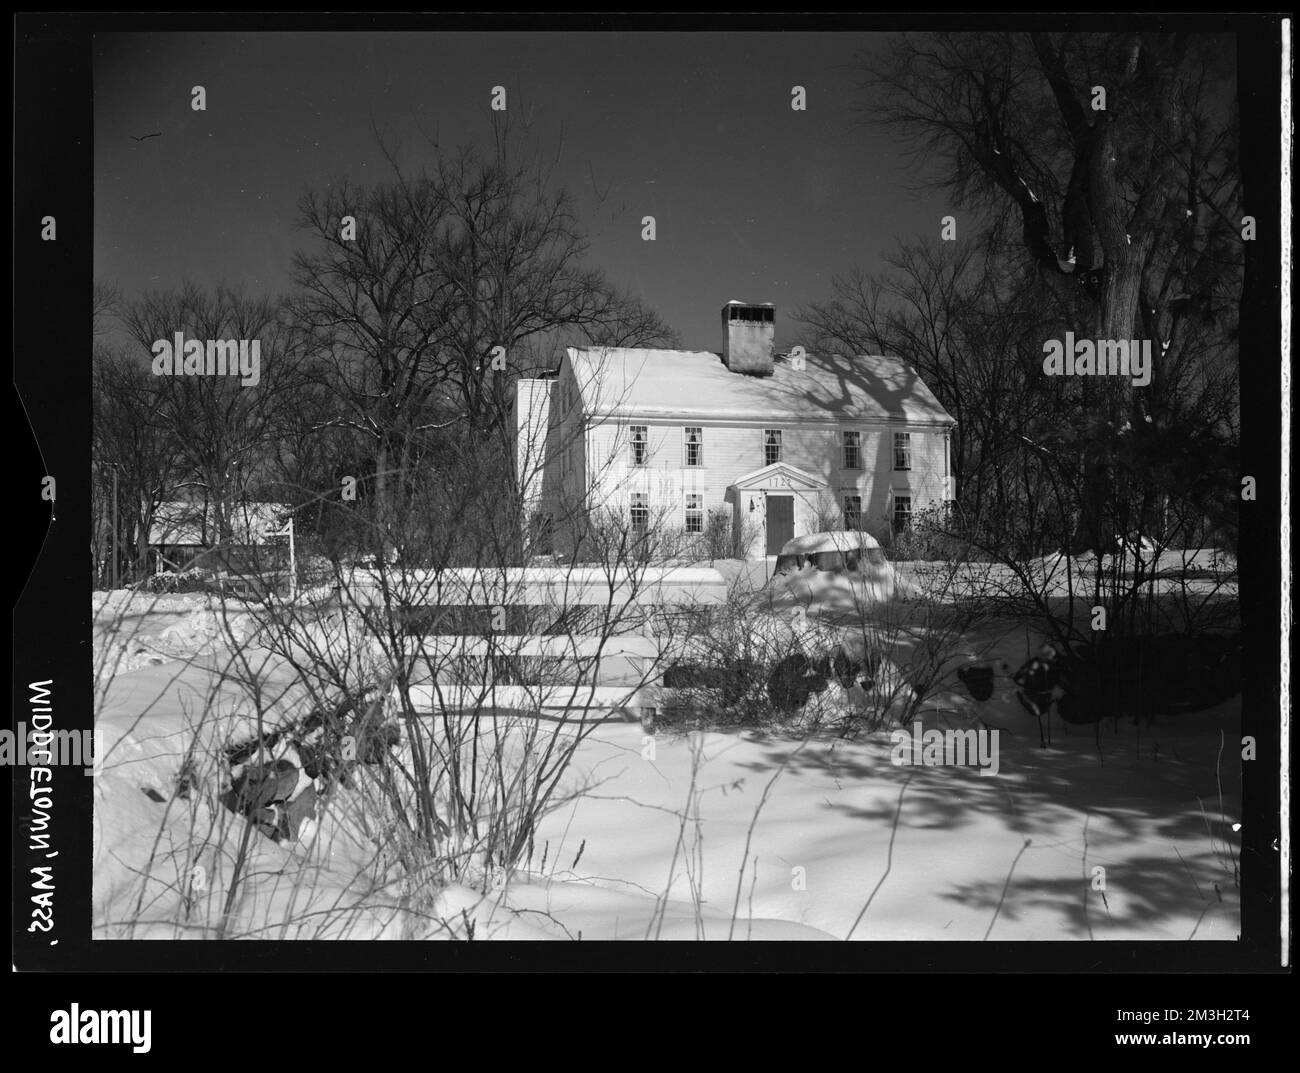 Middleton, Joseph Fuller House , Architecture, Dwellings, Trees, Gates. Samuel Chamberlain Photograph Negatives Collection Stock Photo